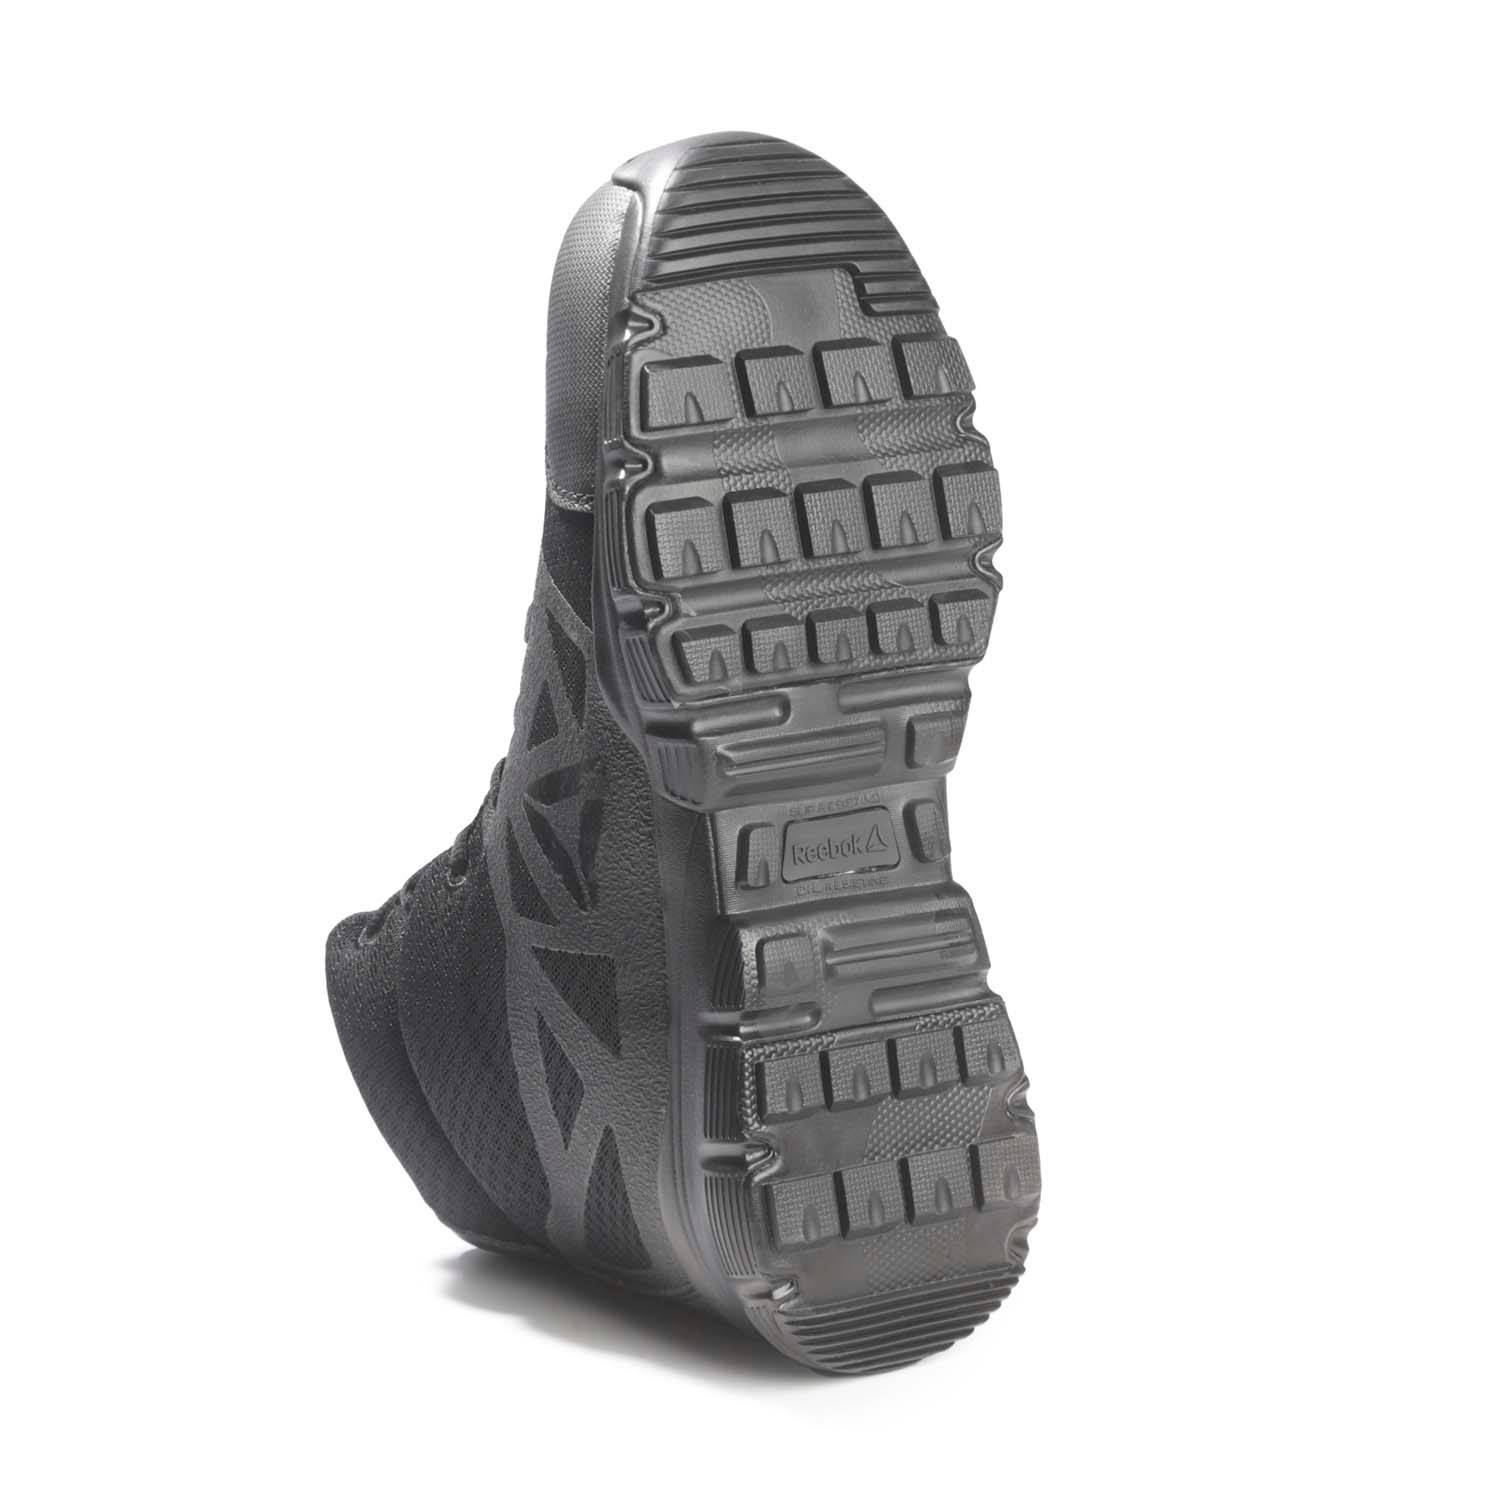 reebok 6 dauntless ultra light side zip duty boots